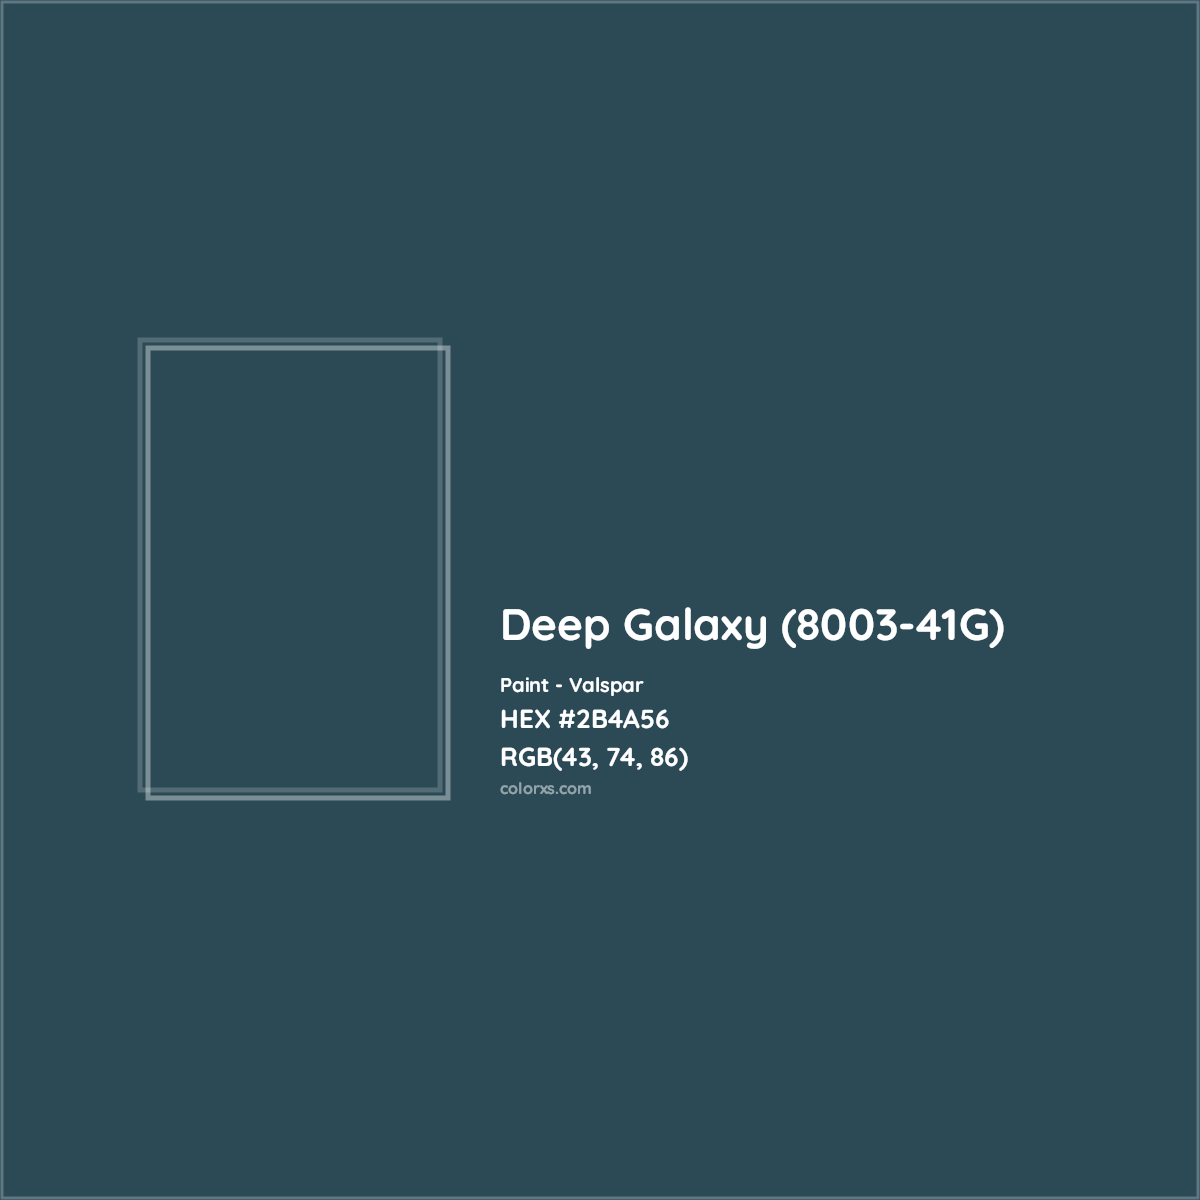 HEX #2B4A56 Deep Galaxy (8003-41G) Paint Valspar - Color Code